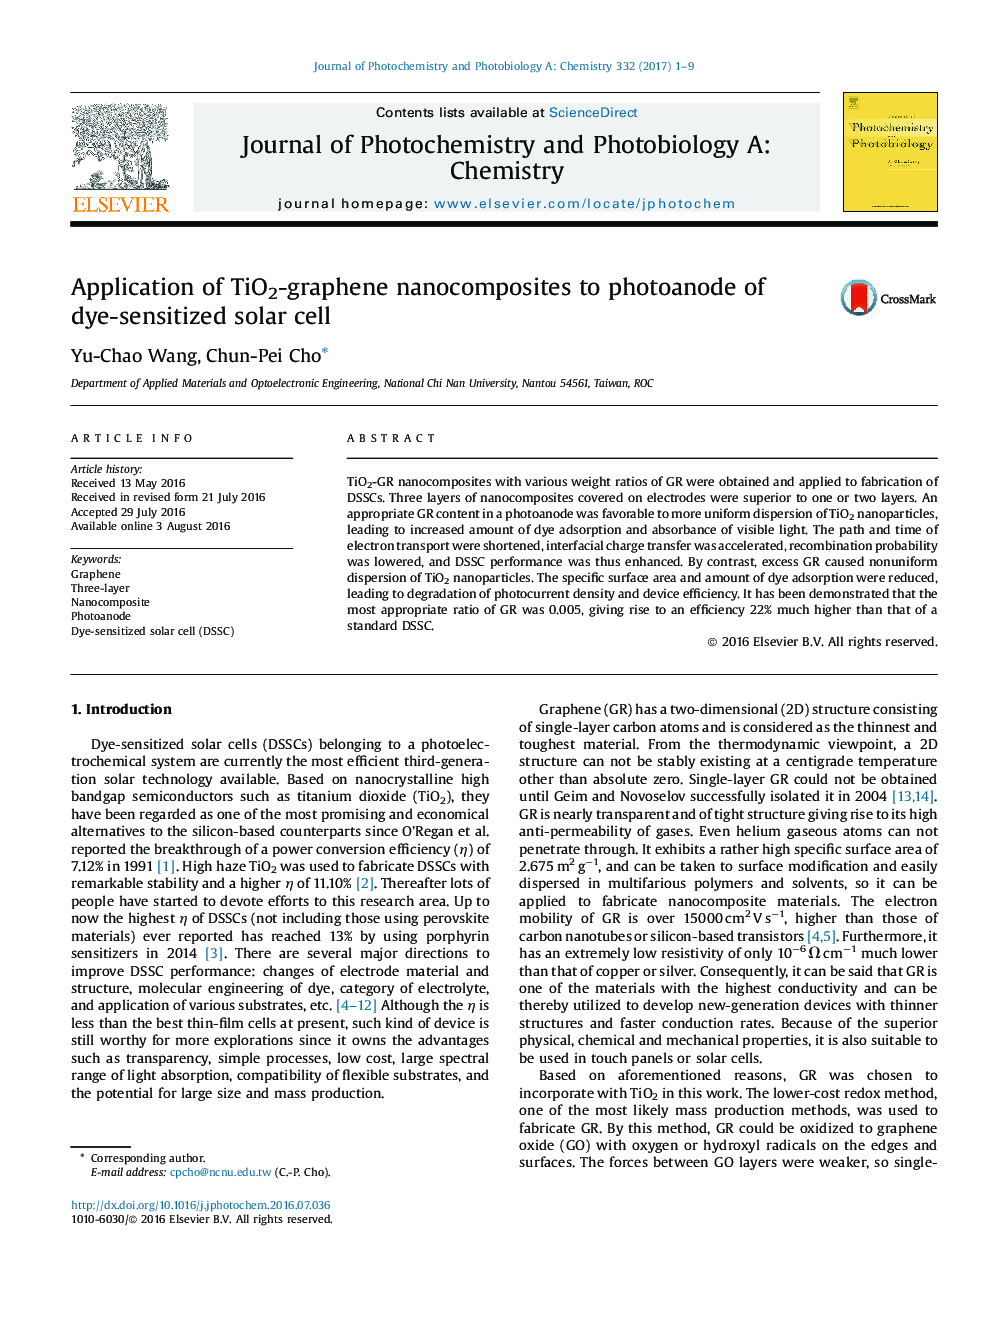 Application of TiO2-graphene nanocomposites to photoanode of dye-sensitized solar cell